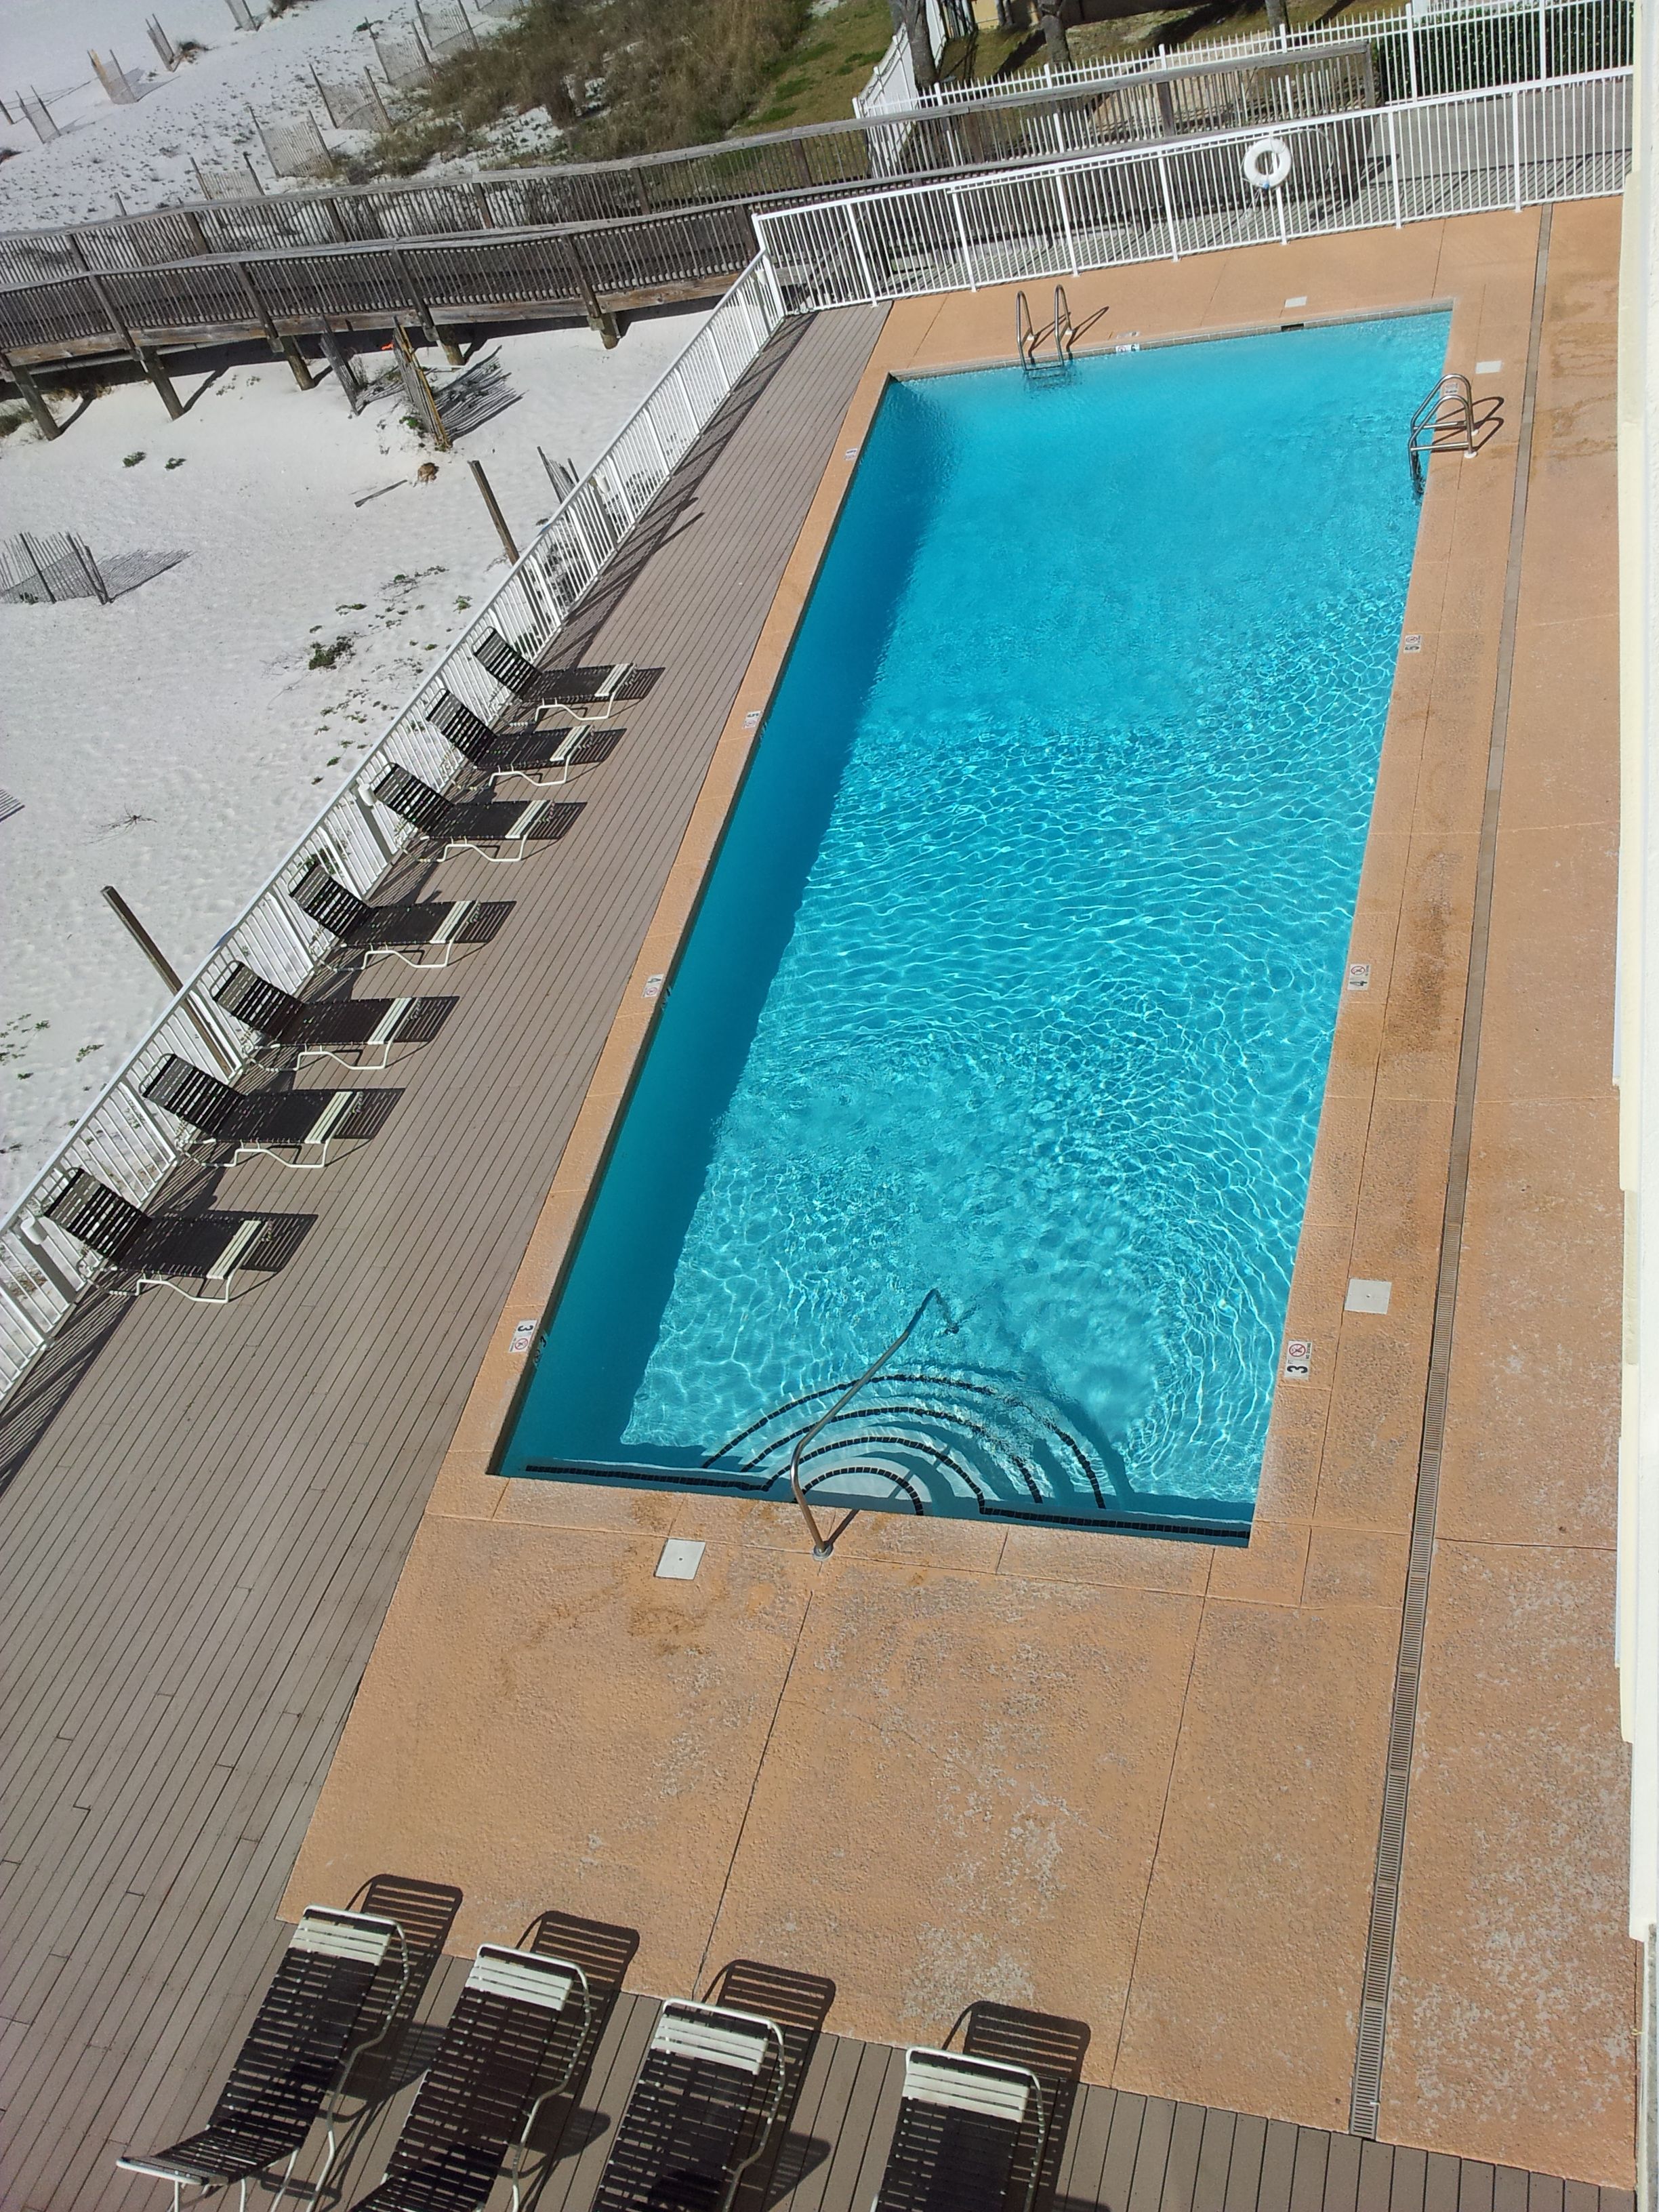 156254273222_spacious heated pool with huge deck area.jpg